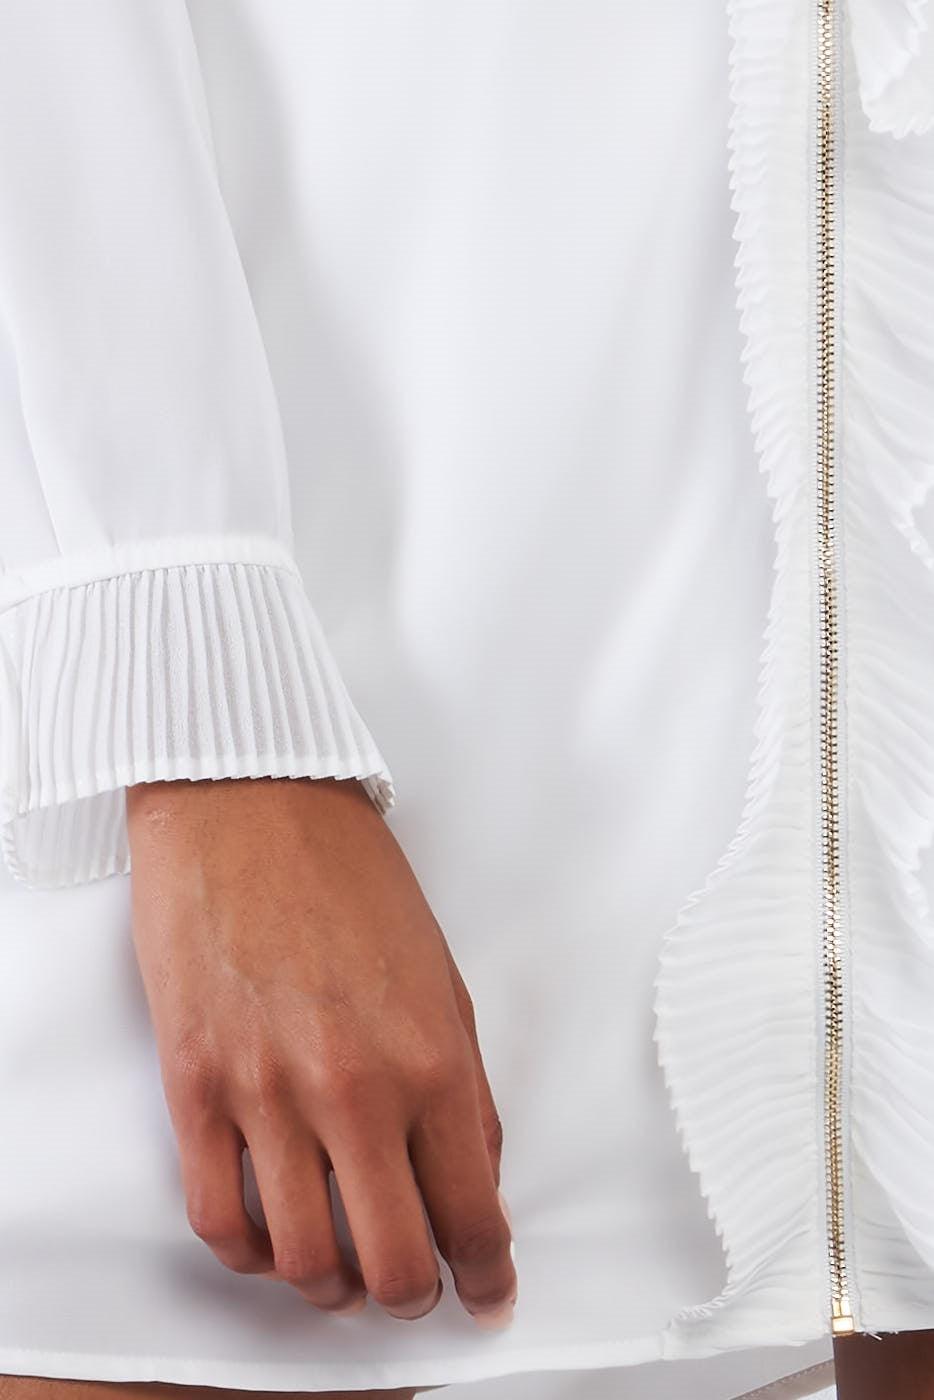 Solid White Classy Loose Fit V-Neck Ruffle Hem Long Sleeve Lined Mini Dress /1-2-2-1